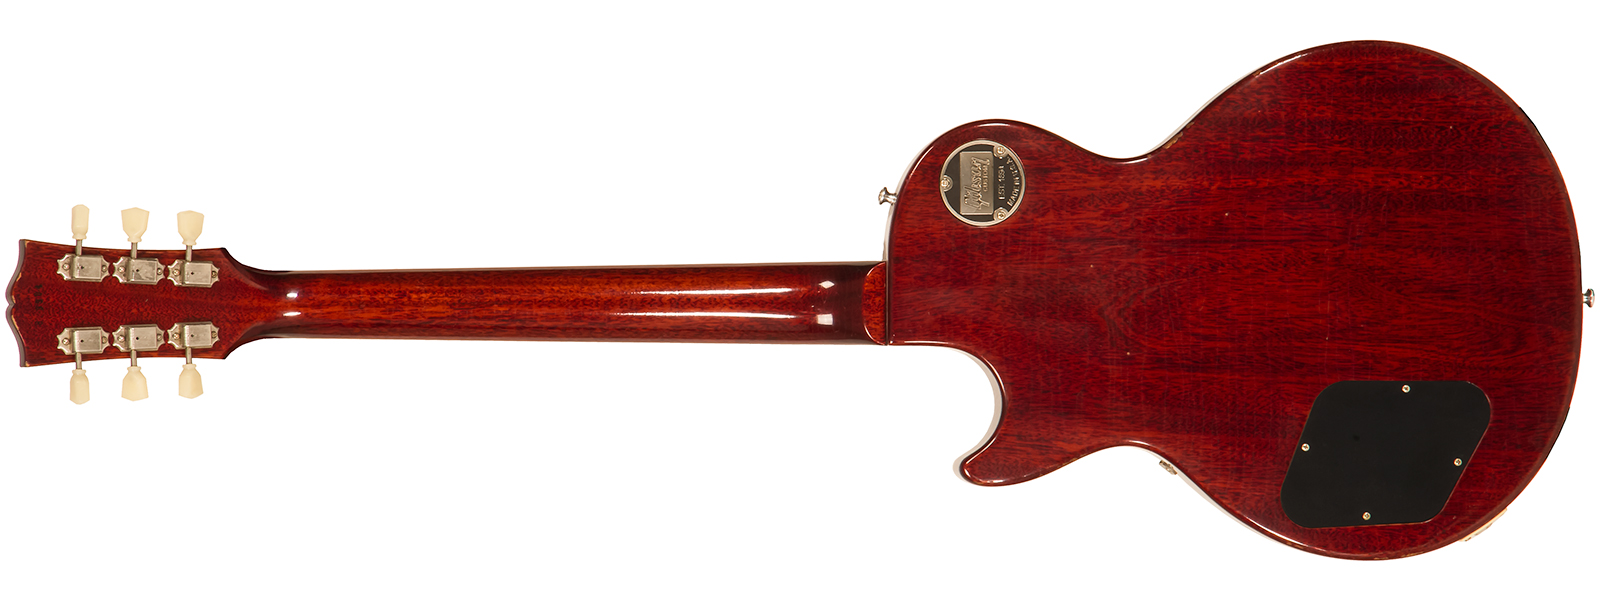 Gibson Custom Shop M2m Les Paul Standard 1958 2h Ht Rw #89904 - Kentucky Bourbon Fade - Single cut electric guitar - Variation 1